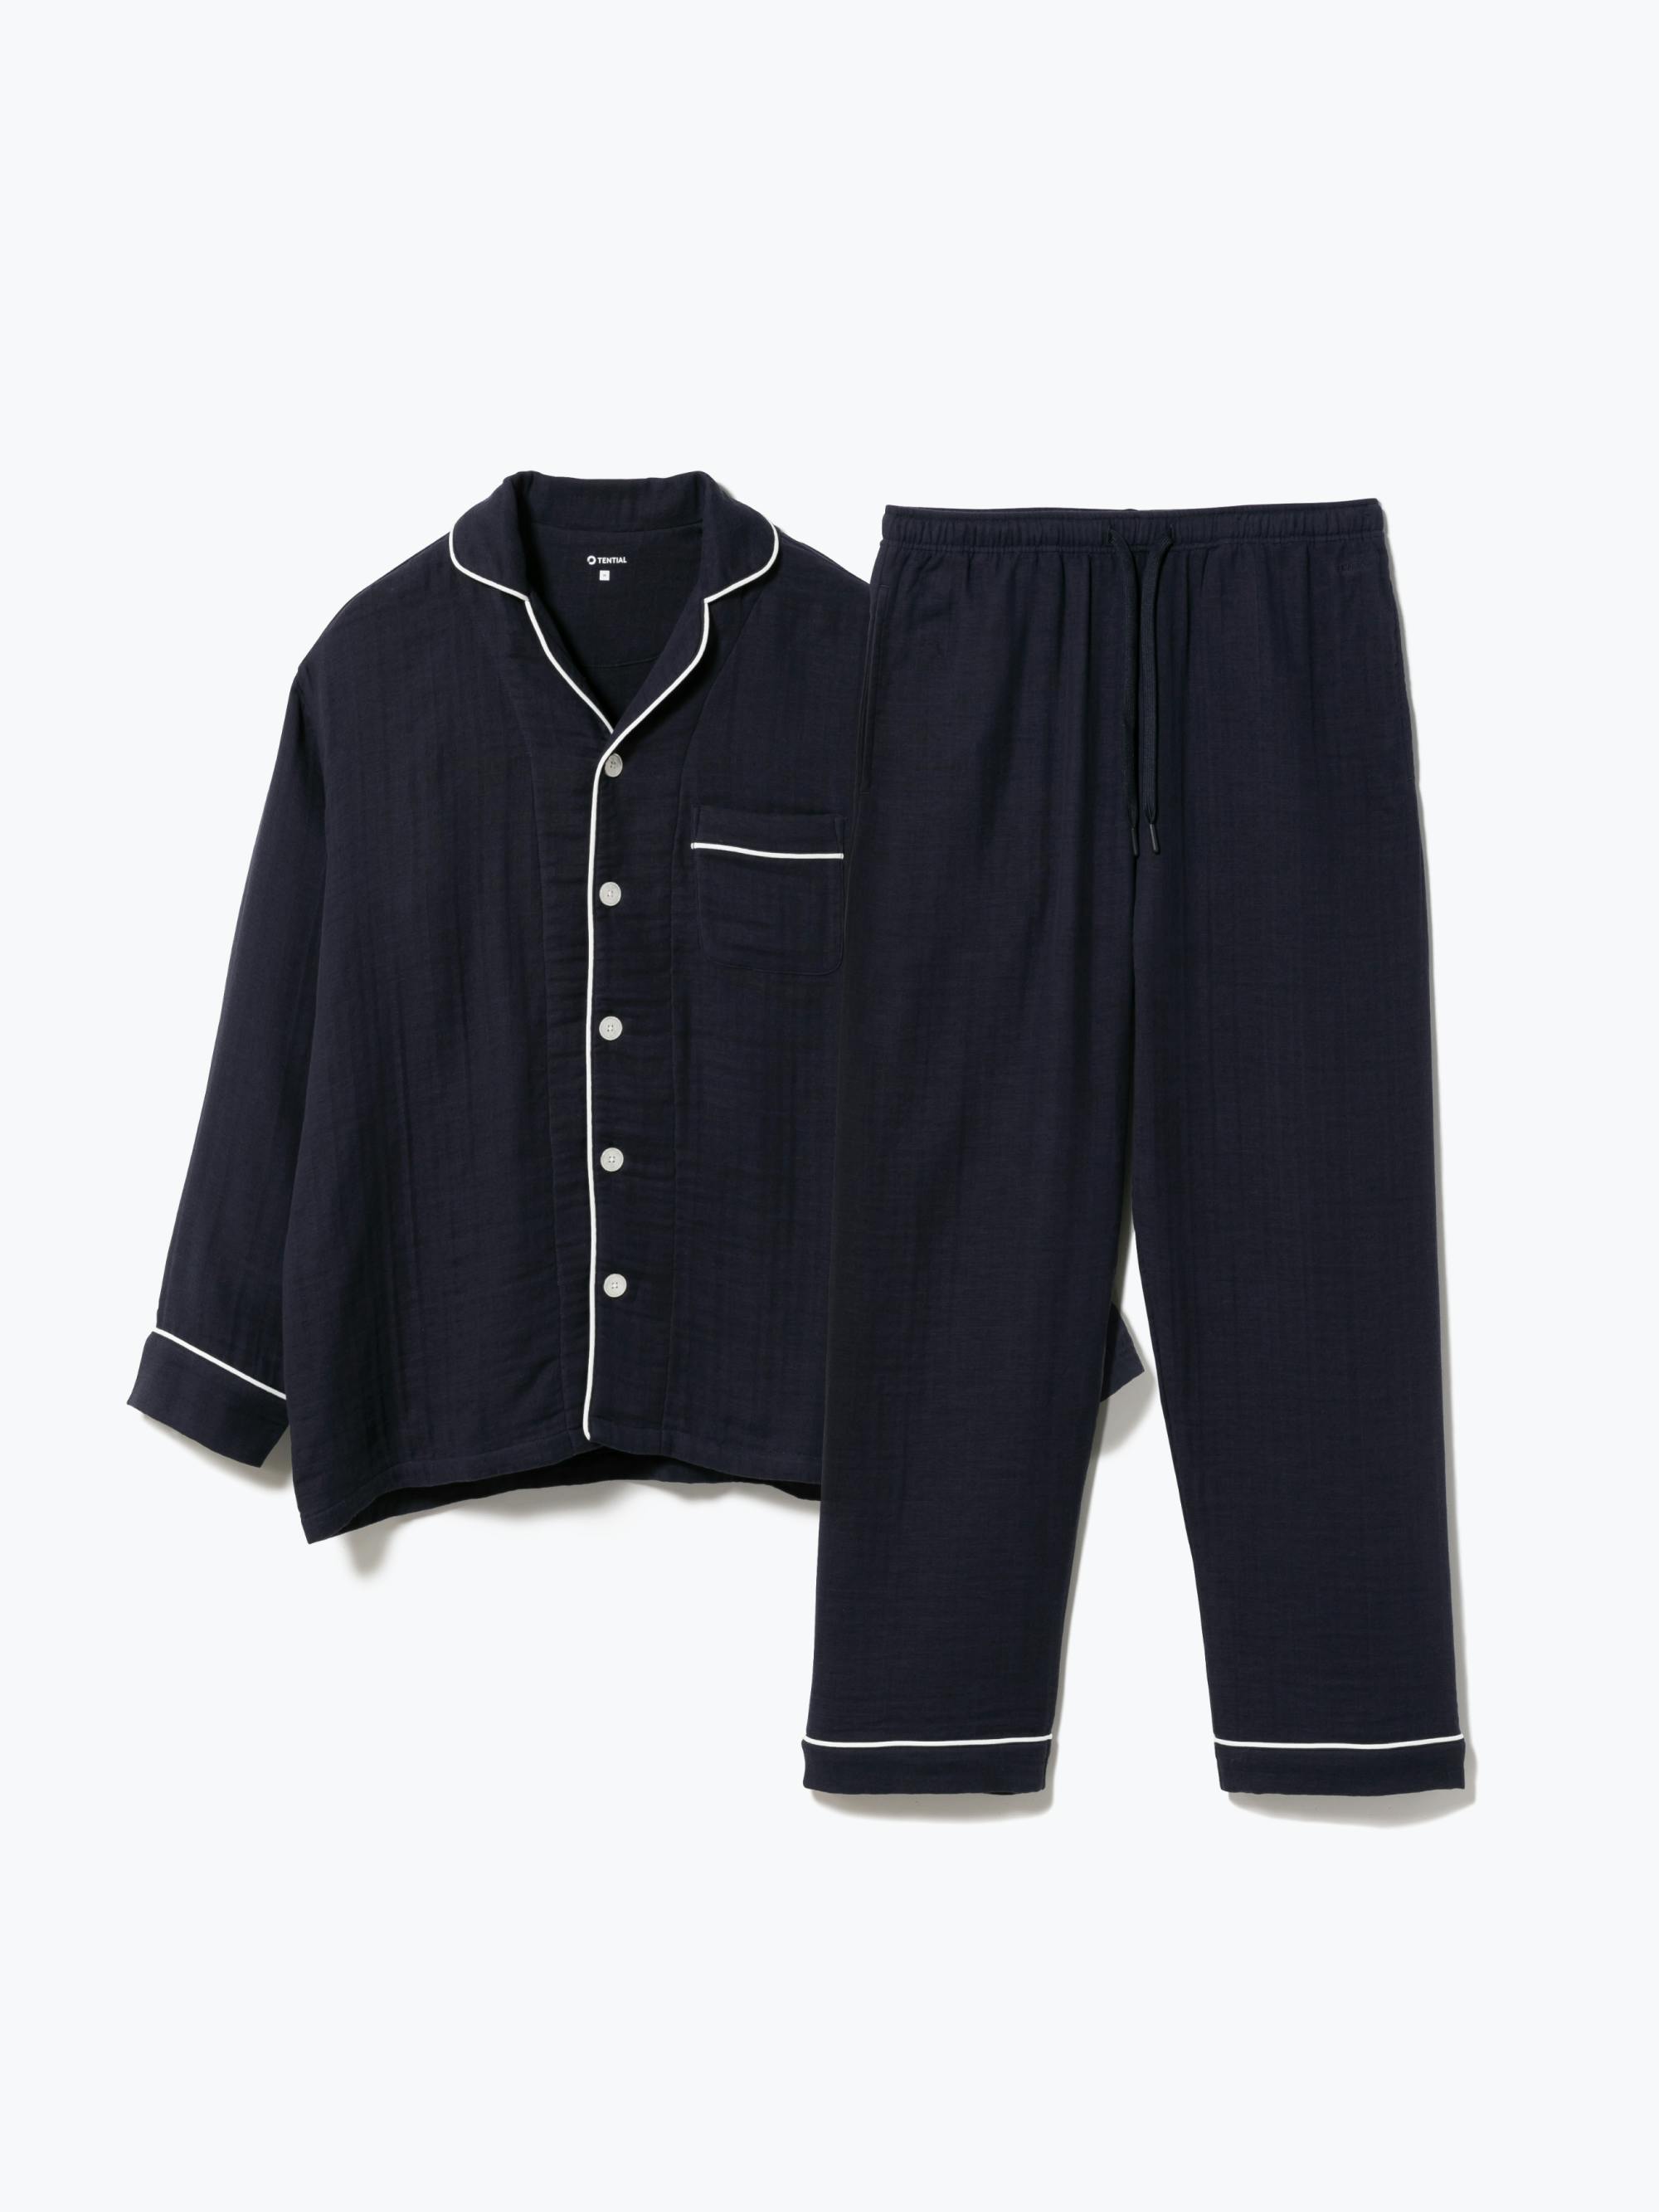 BAKUNE Pajamas Gauze 上下セット（長袖・ロングパンツ） | TENTIAL 